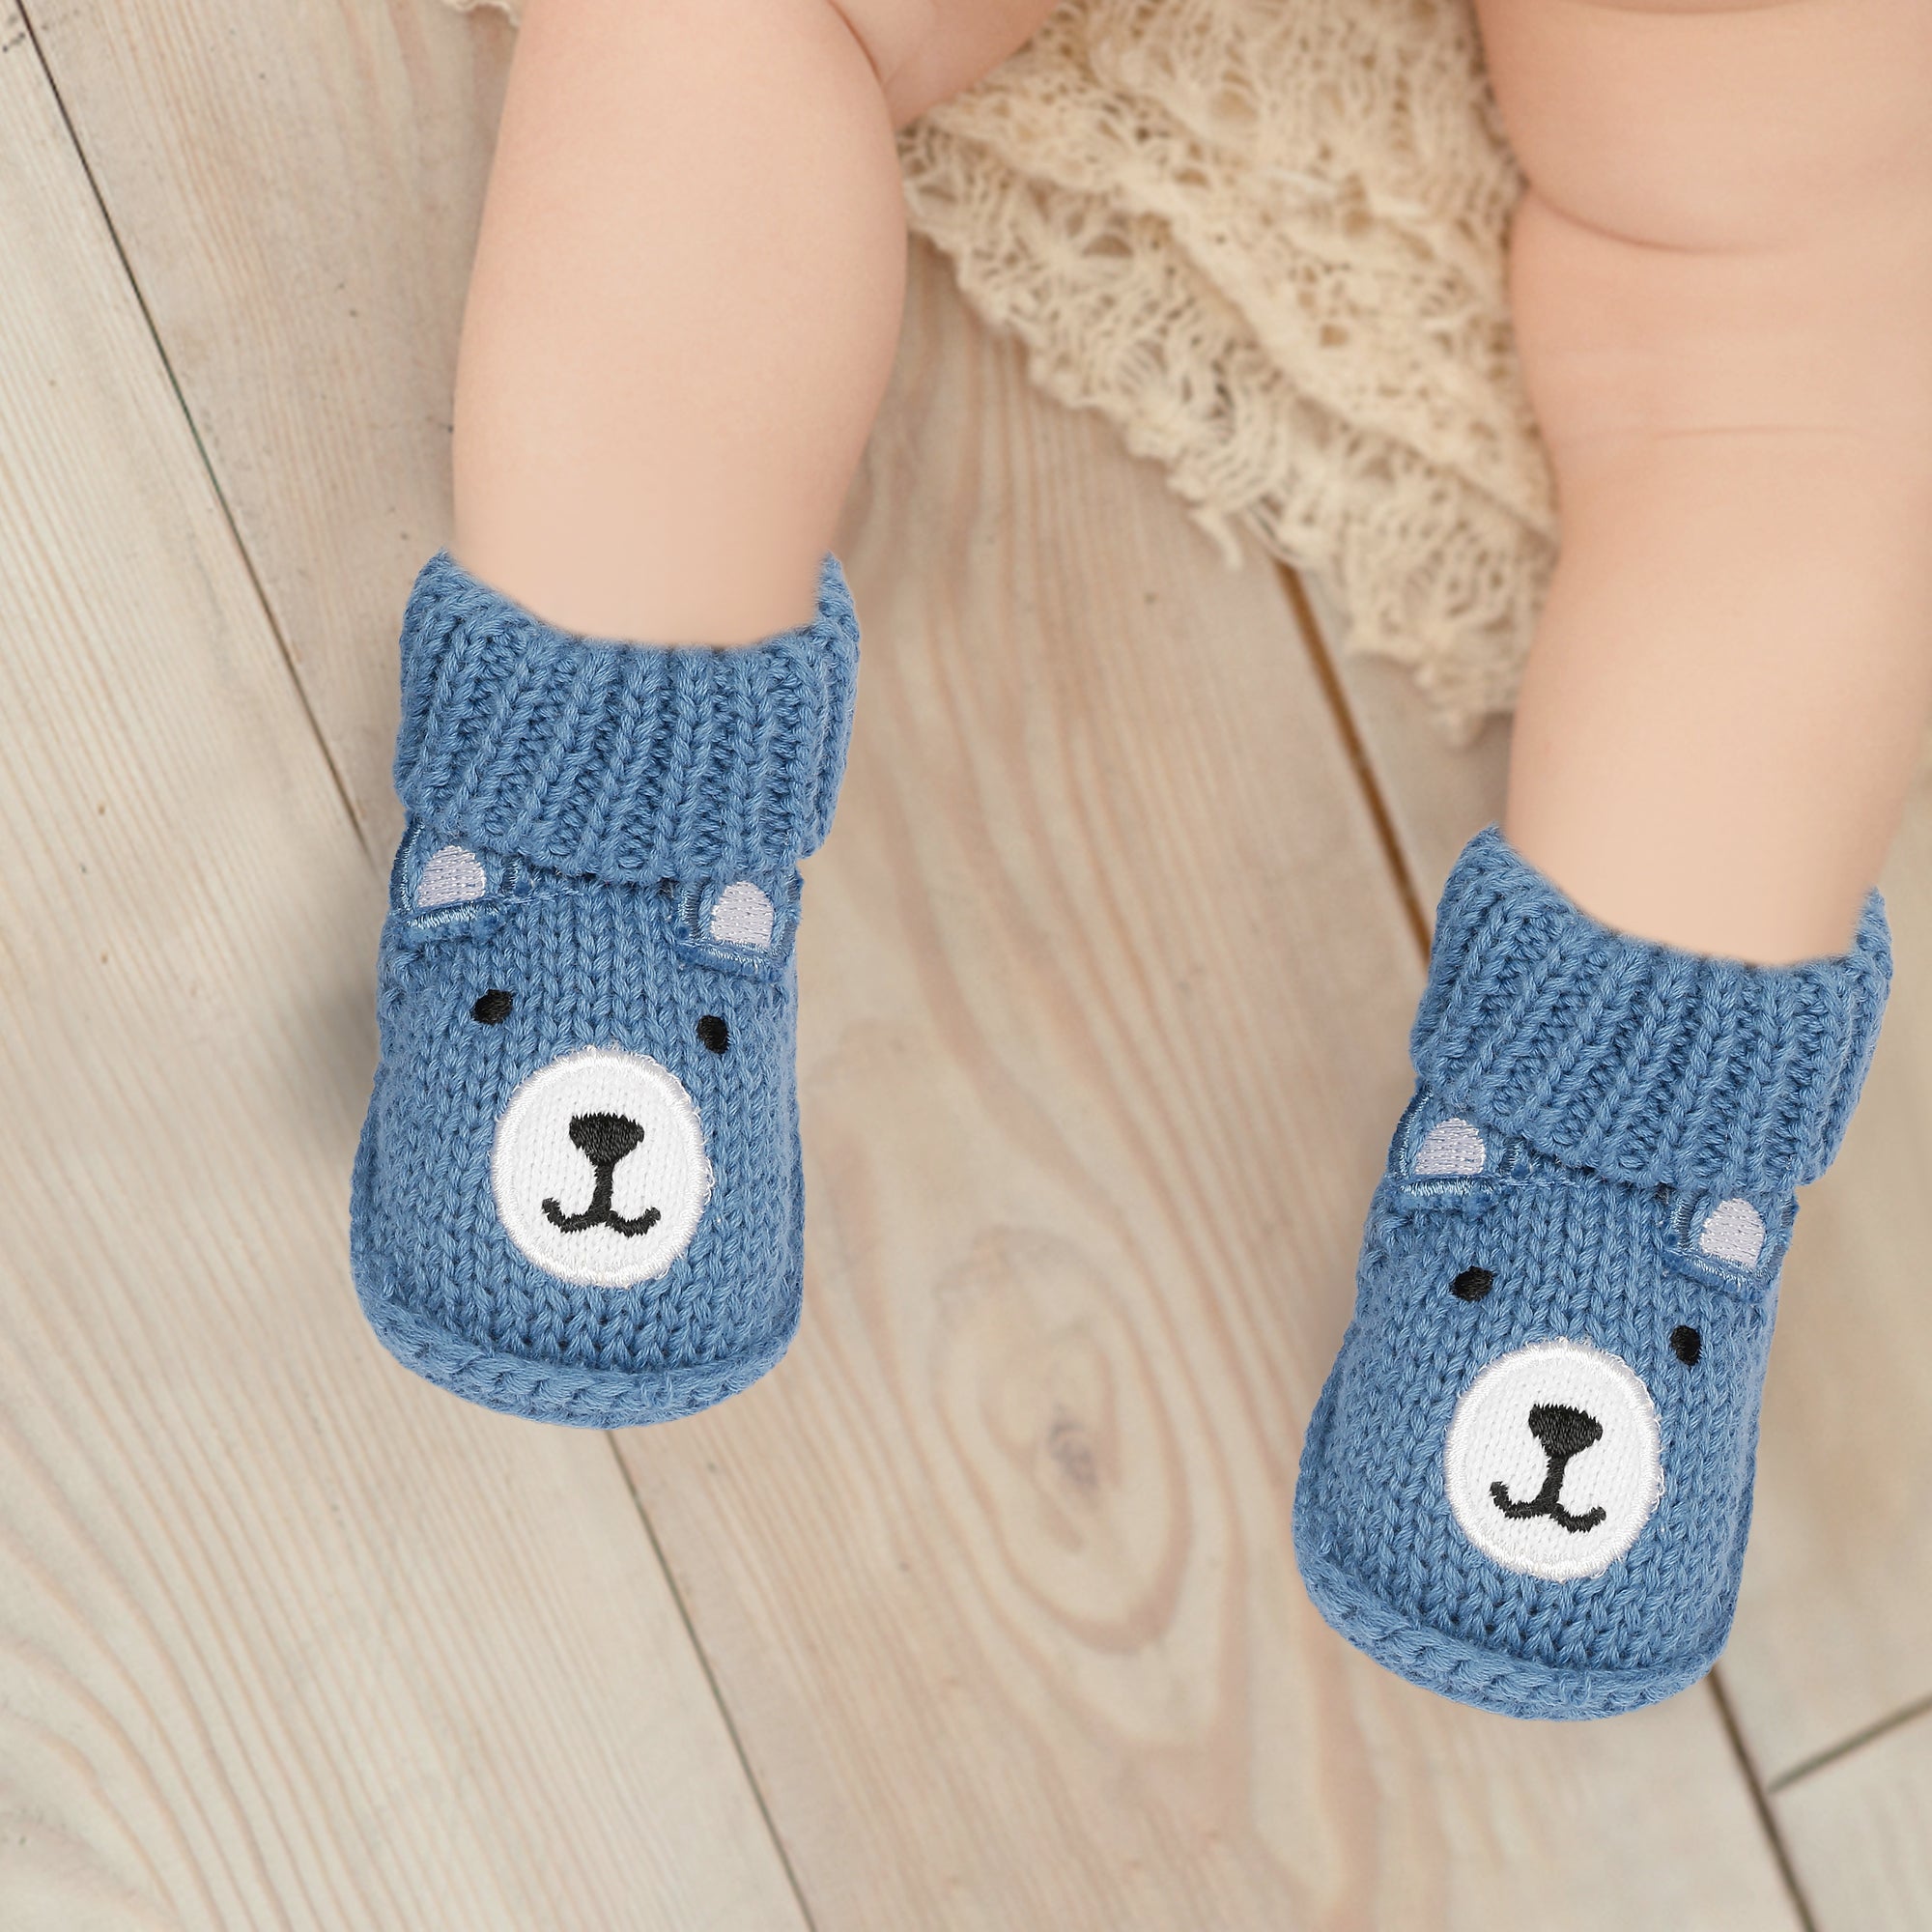 Baby Moo BFF Bear Newborn Crochet Socks Booties - Blue